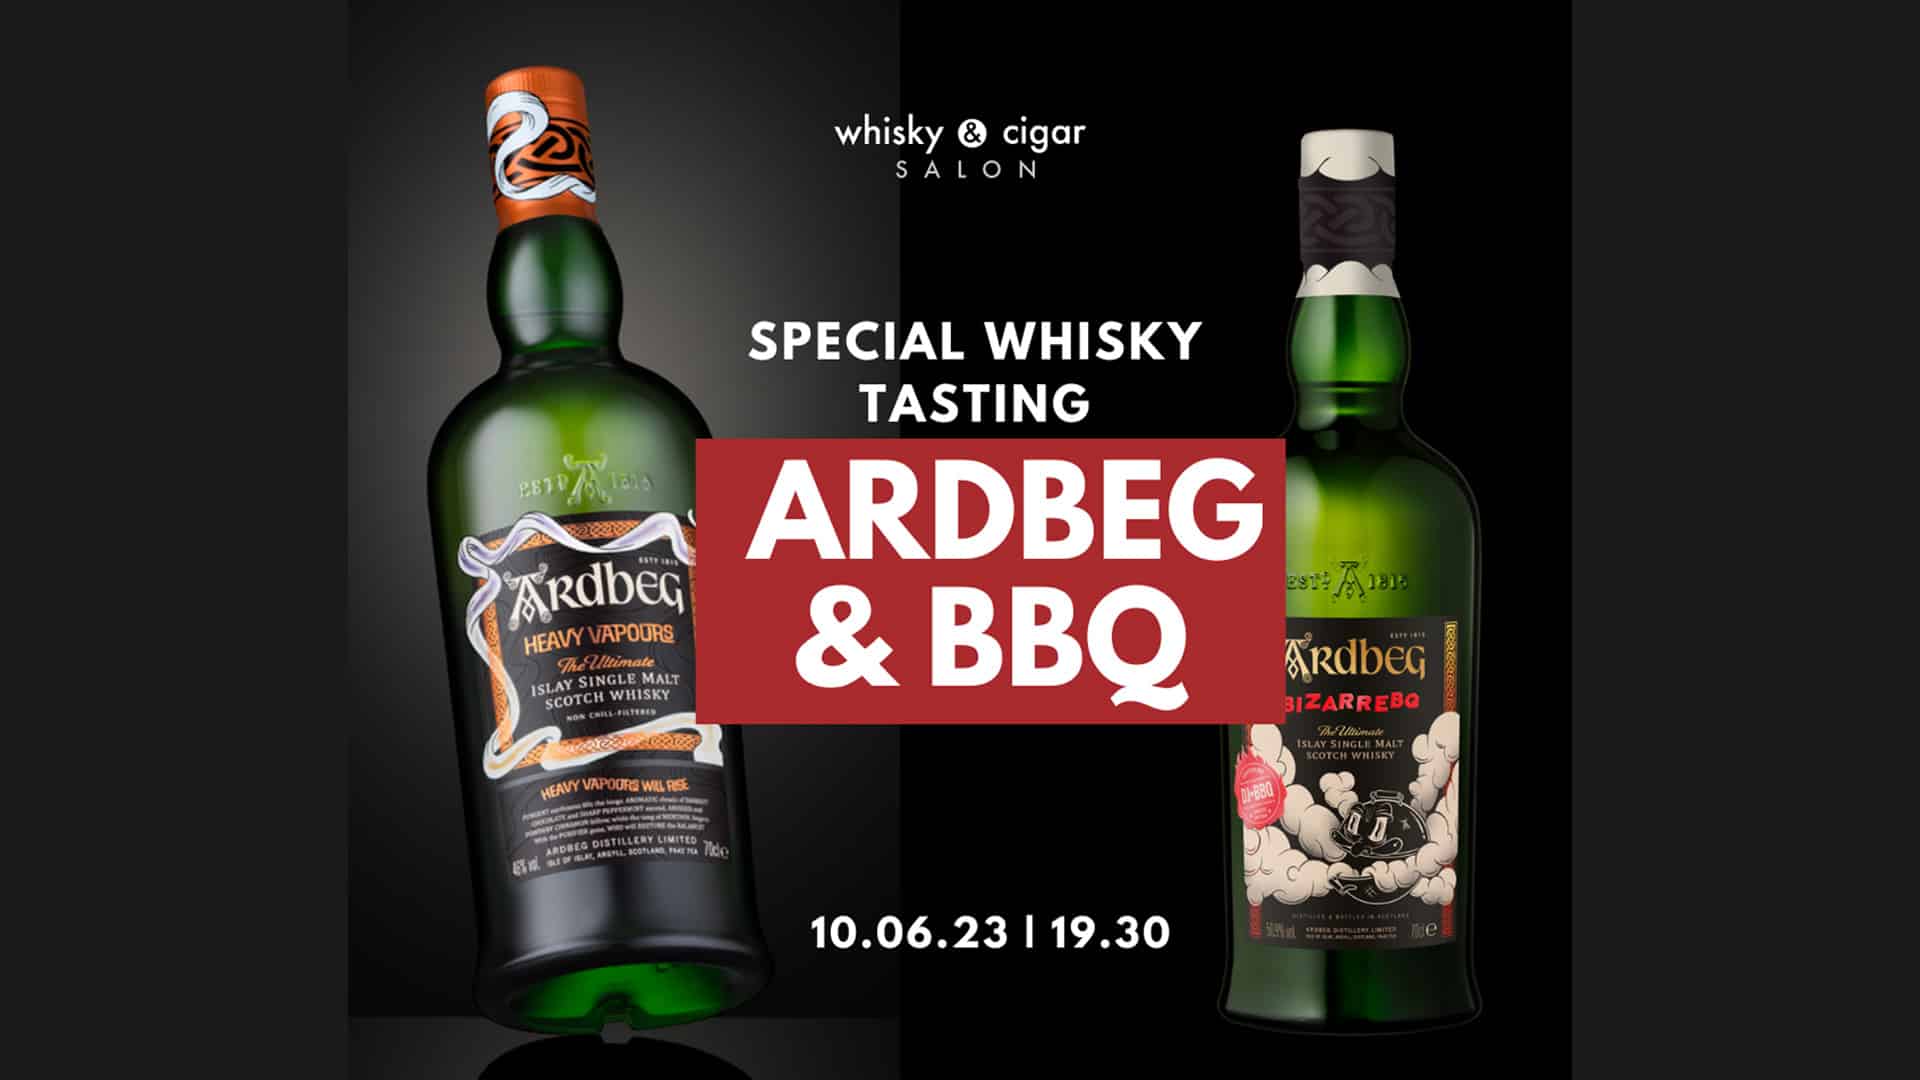 Ardbeg & BBQ Special Whisky Tasting im whisky & cigar salon